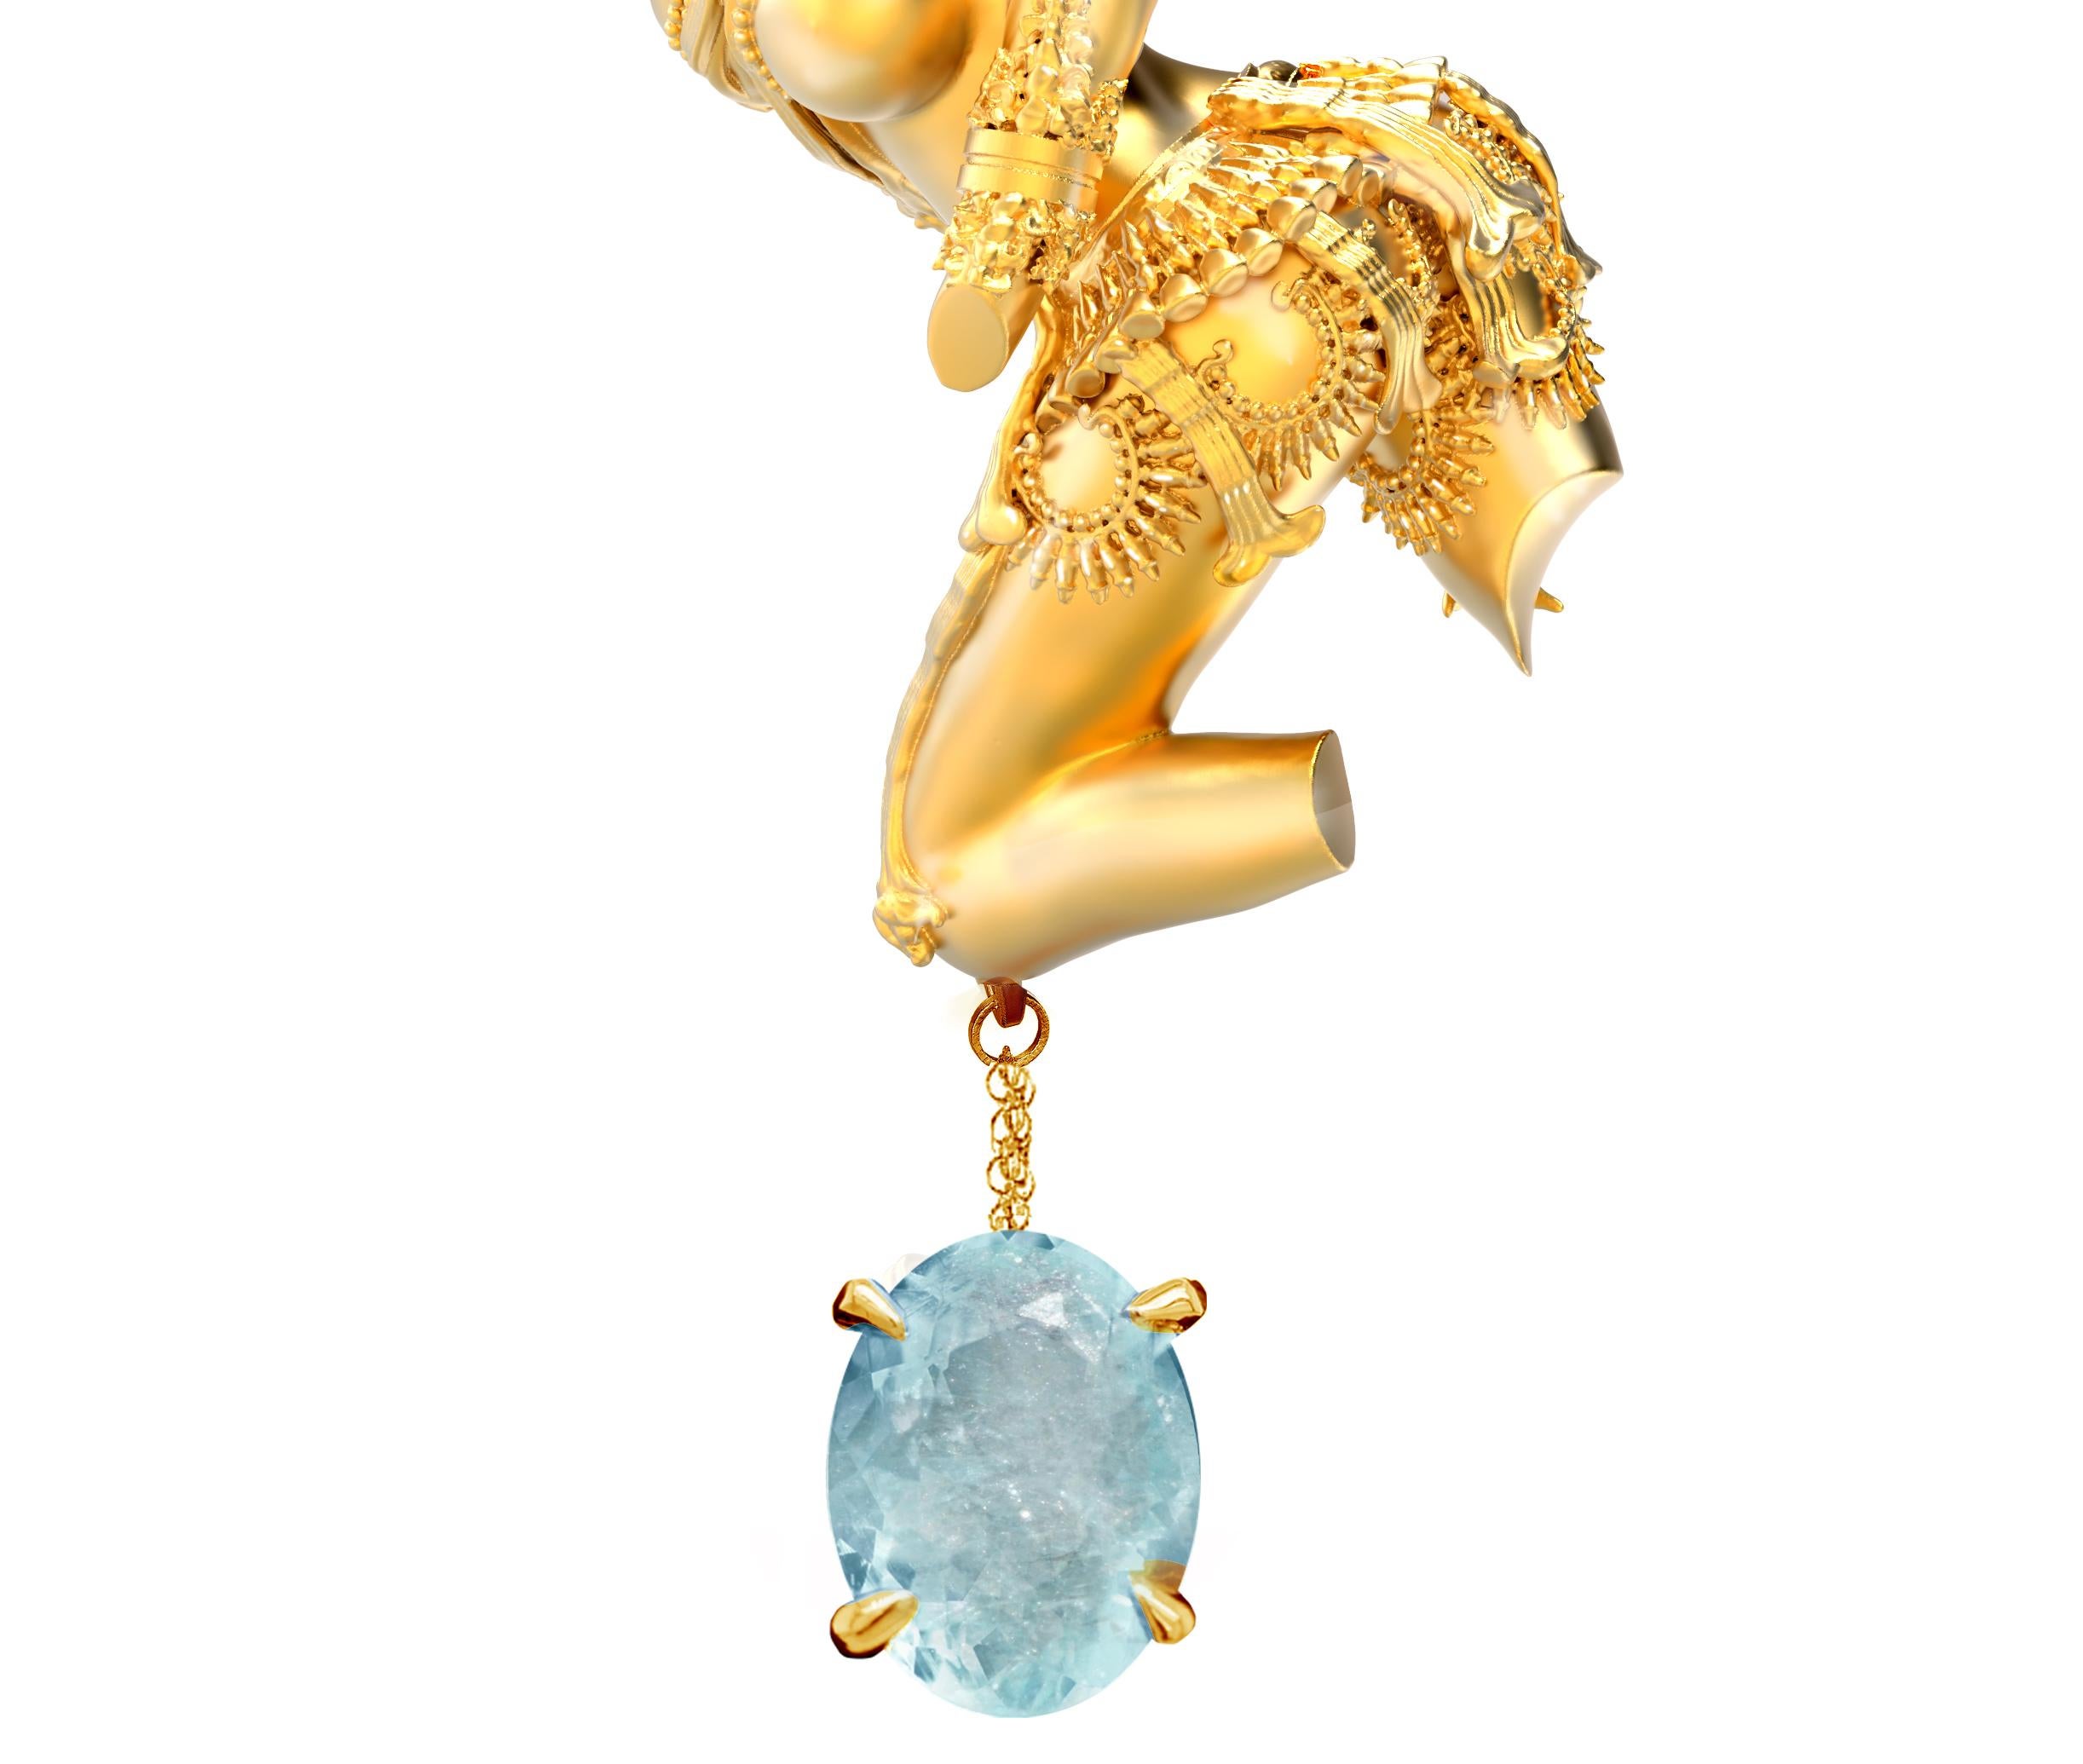 Contemporary Eighteen Karat Yellow Gold Sculptural Pendant Necklace with Paraiba Tourmaline  For Sale